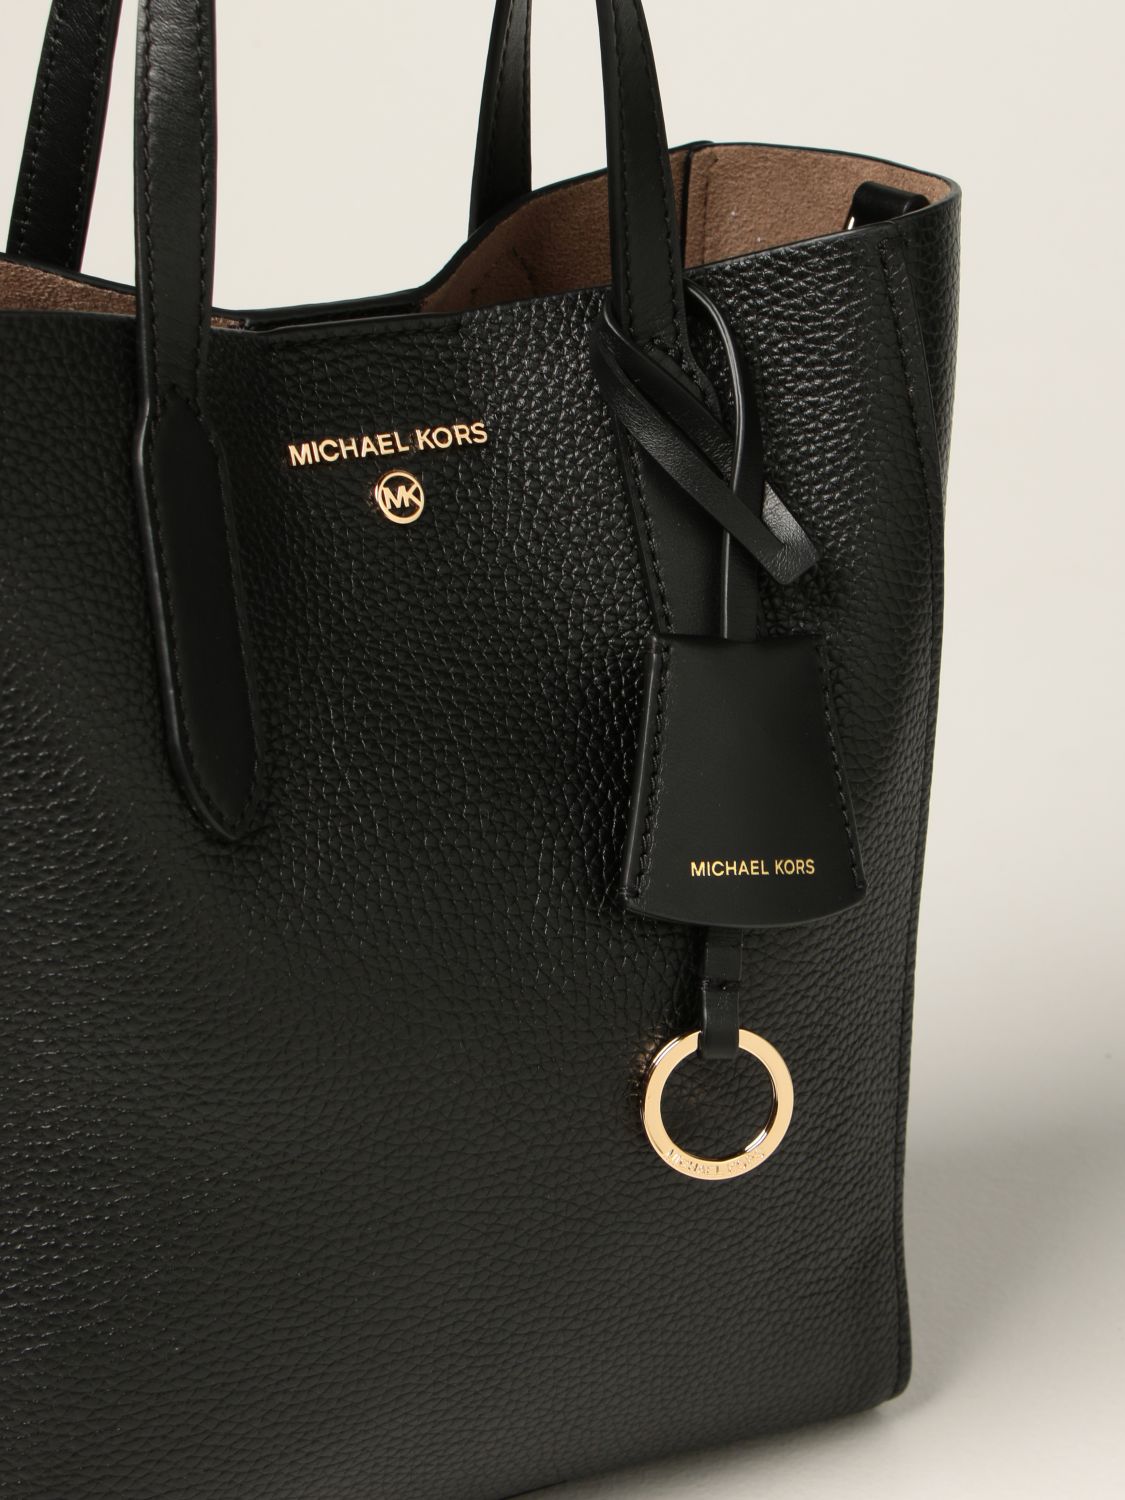 MICHAEL MICHAEL KORS: Sinclair leather bag | Tote Bags Michael Michael Kors Women Black Tote Bags Michael Michael Kors GIGLIO.COM